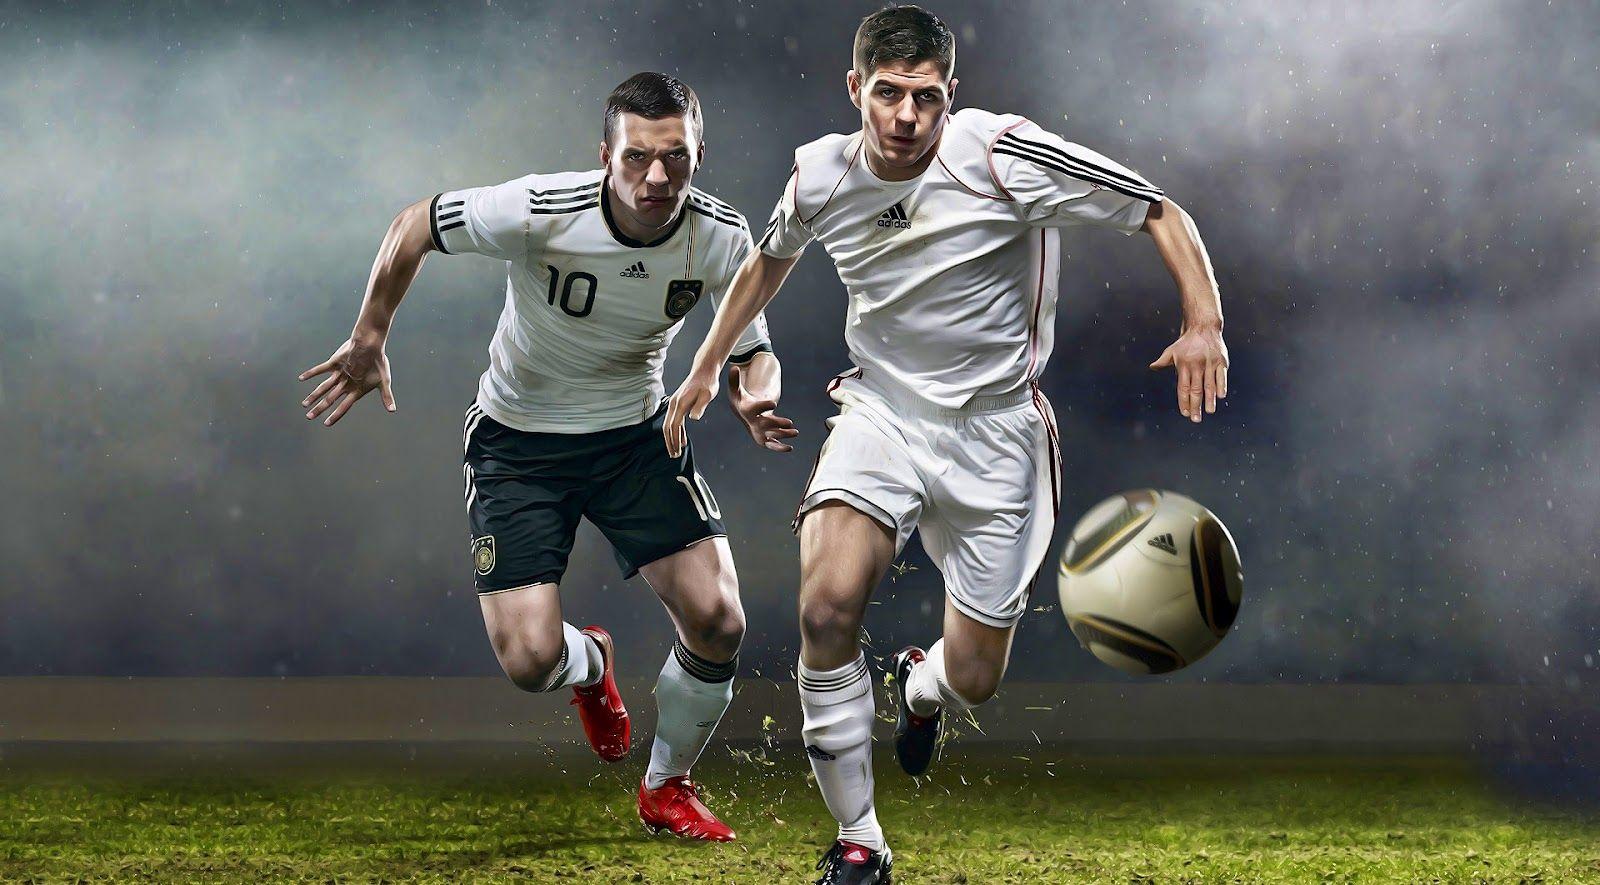 Soccer Players Wallpaper: Wallpaper of Soccer Players